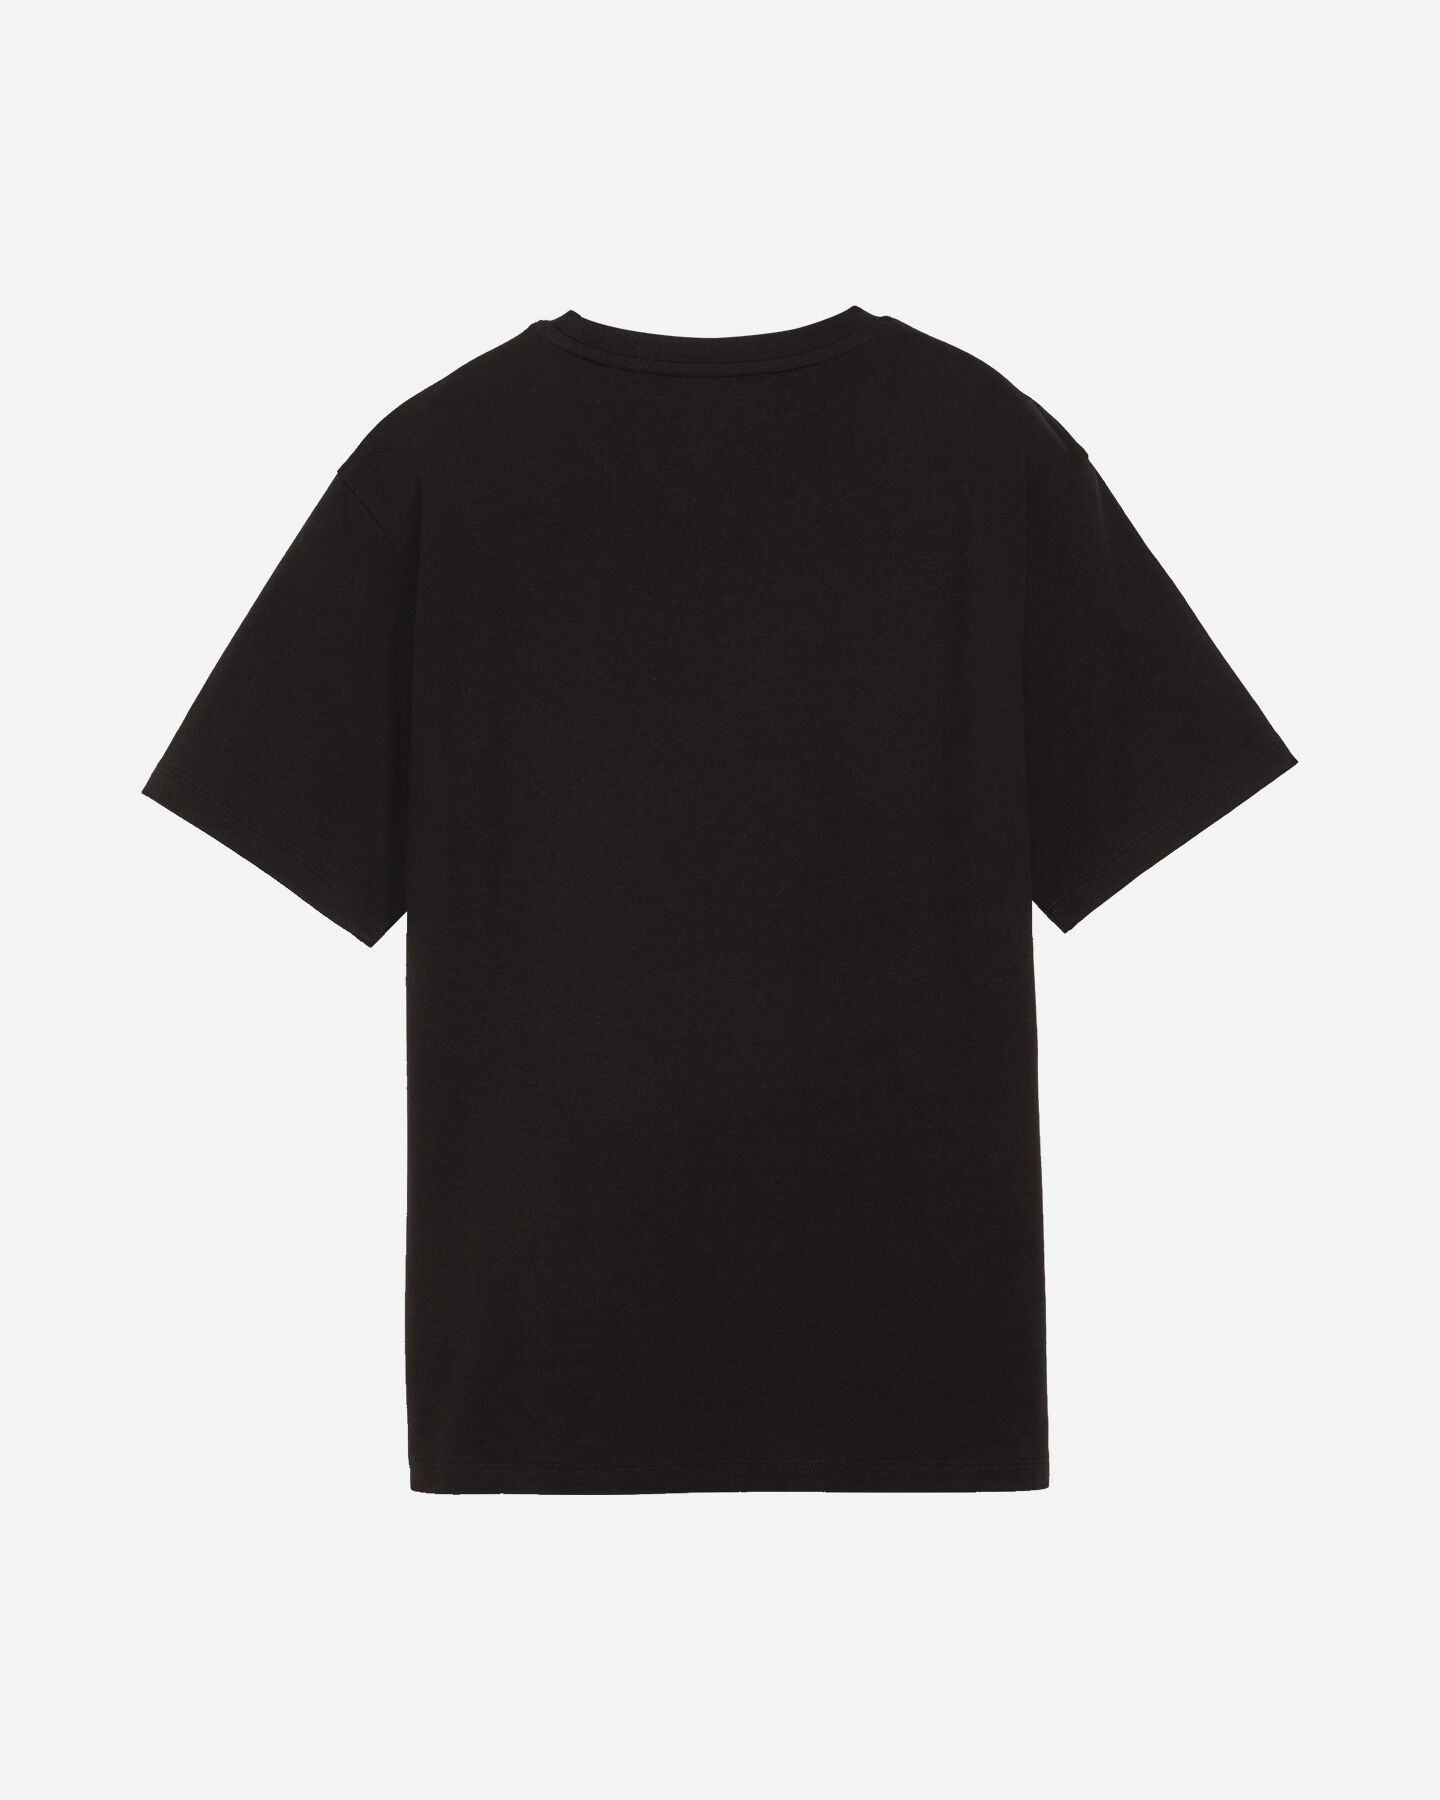  T-Shirt PUMA LOGO W S5662874|01|S scatto 1